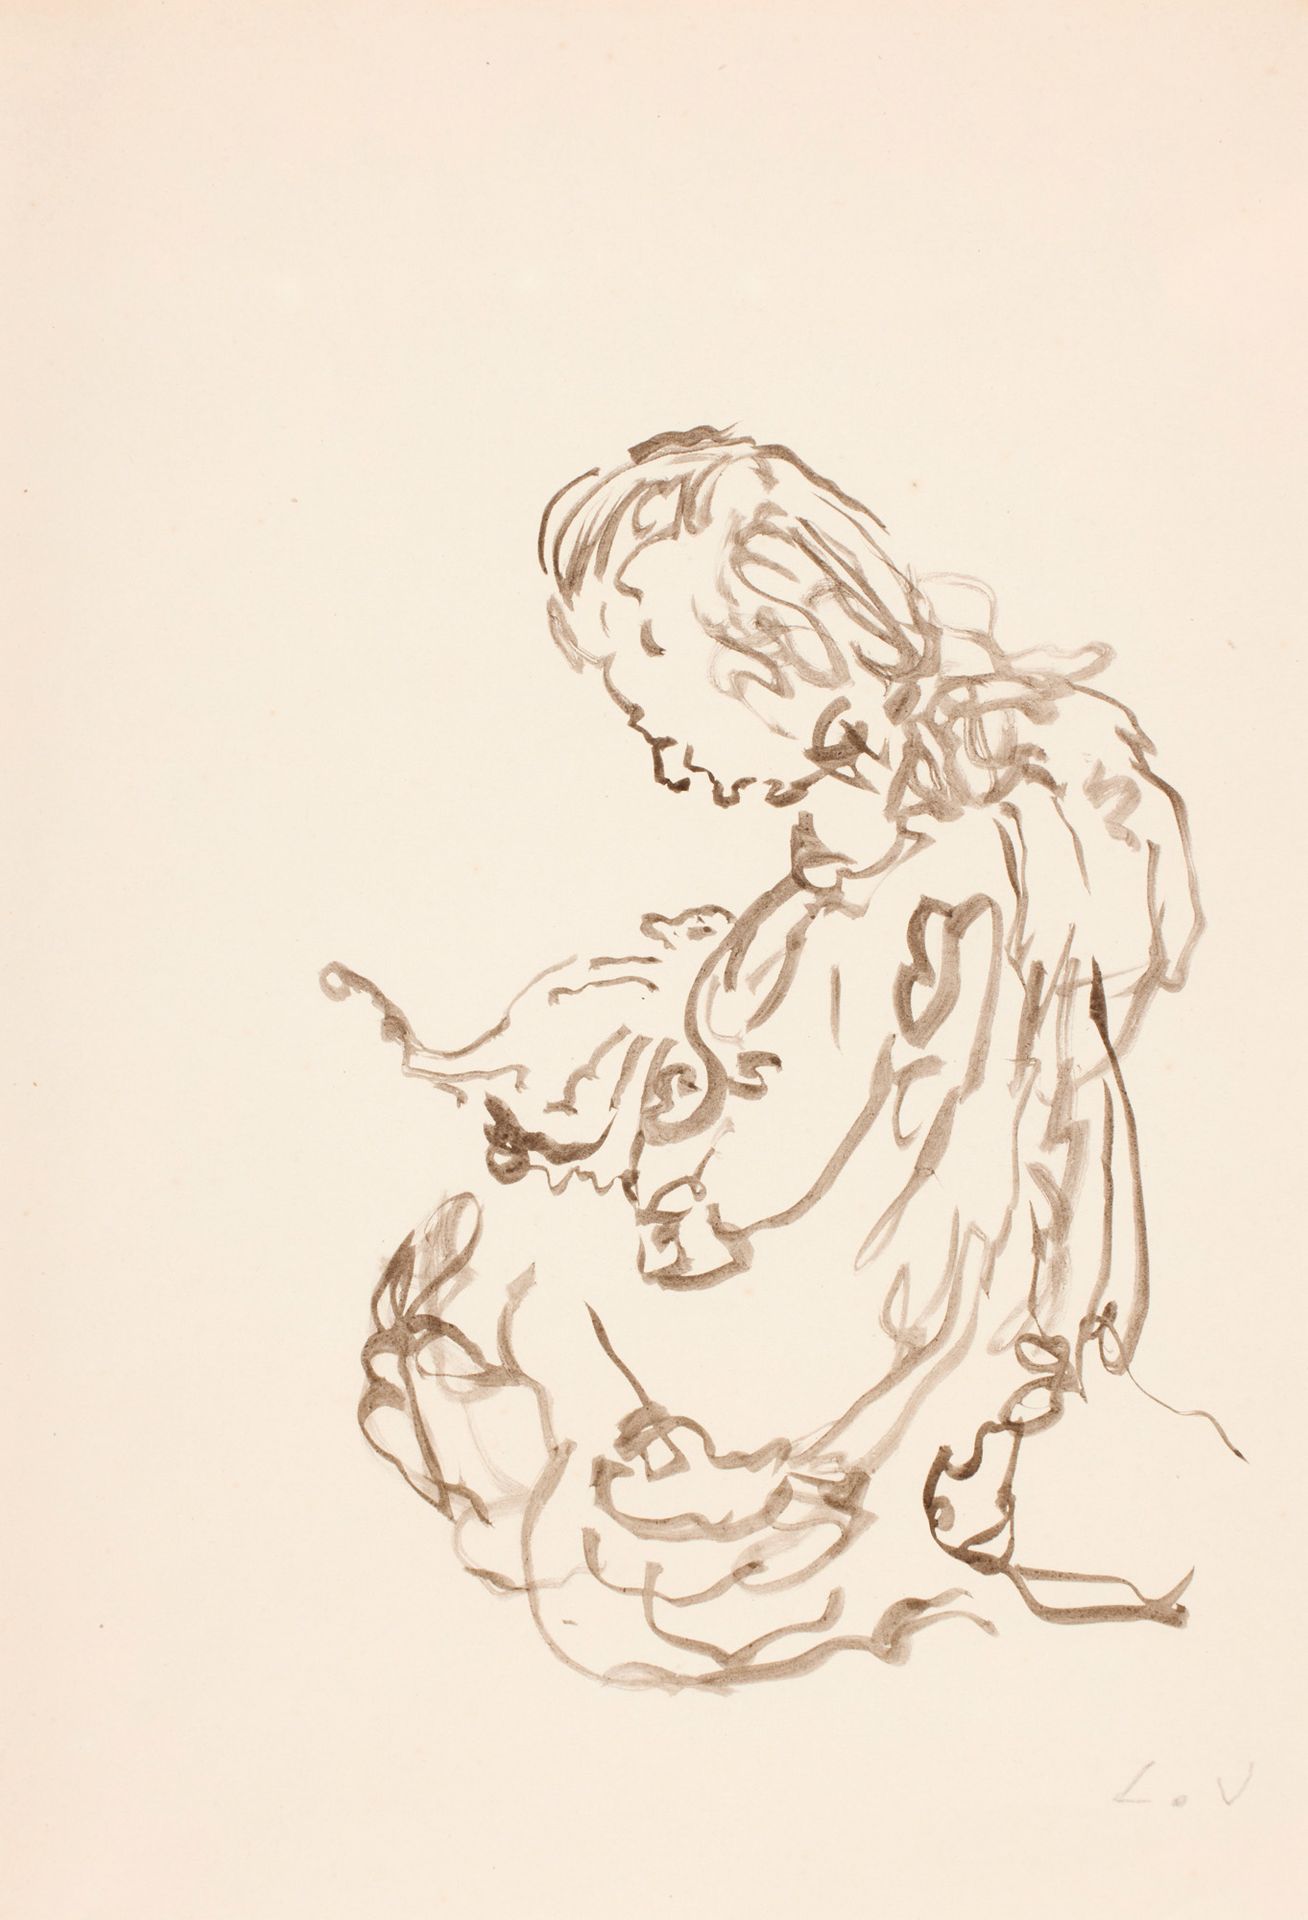 Louis VALTAT (1869-1952) 路易斯-瓦尔塔 (1869-1952)

年轻女孩与一只猫

右下角有水墨字样

29 x 20 厘米